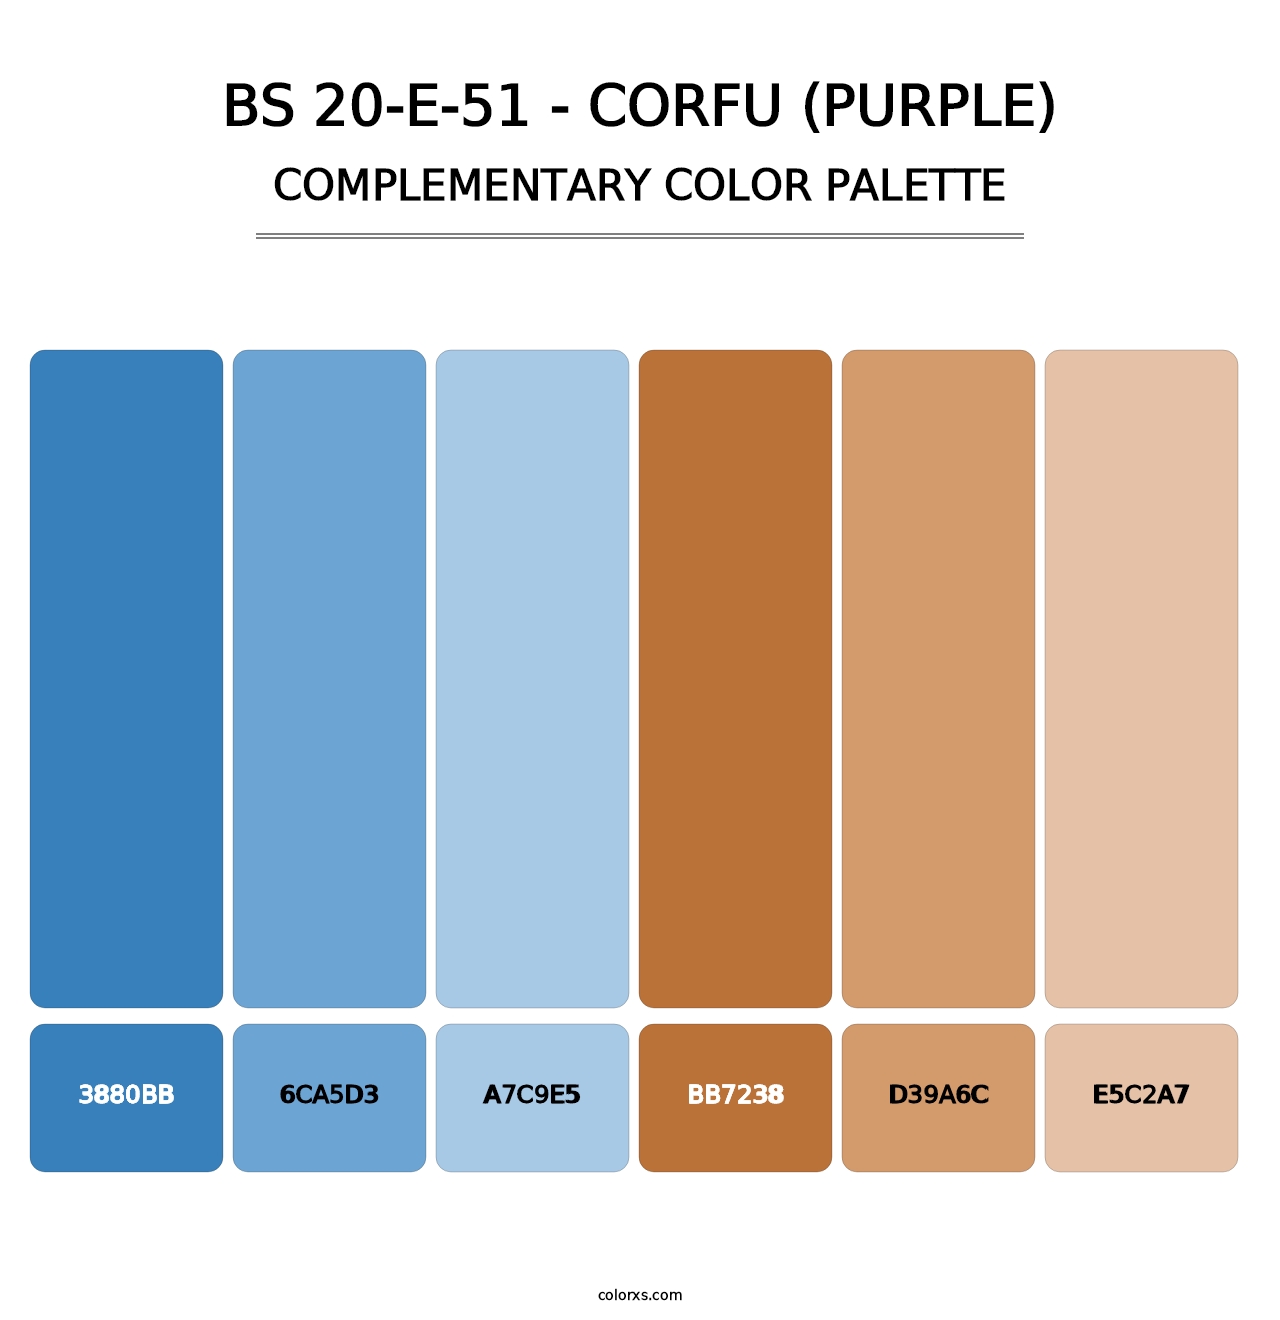 BS 20-E-51 - Corfu (Purple) - Complementary Color Palette